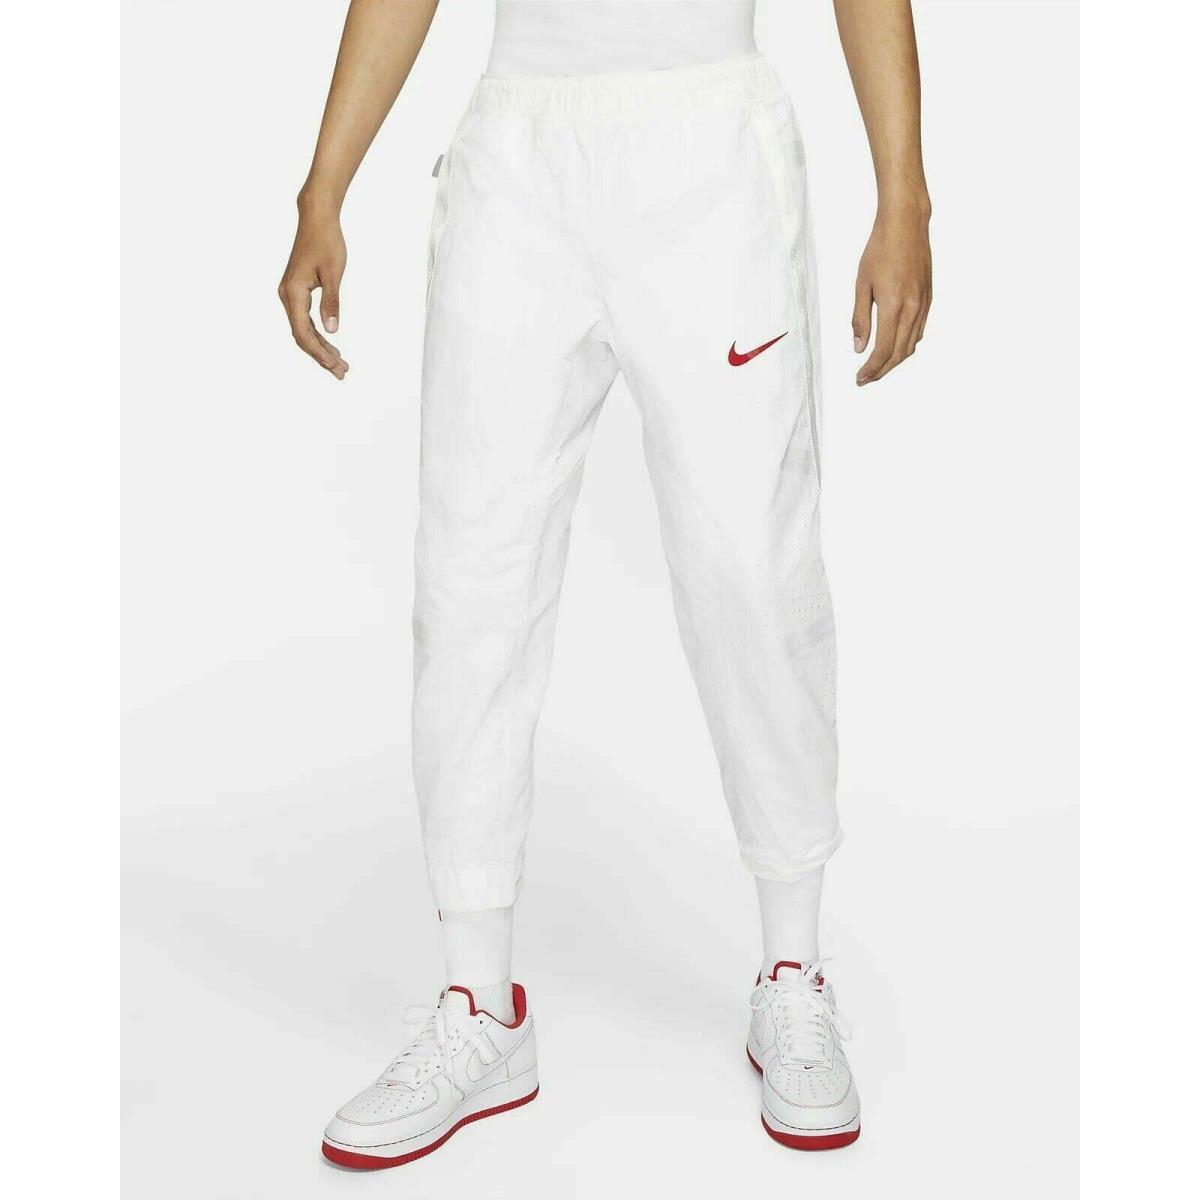 Nike Team Usa Tokyo Olympics Medalstand Pants CK4559-100 White Men Size XL